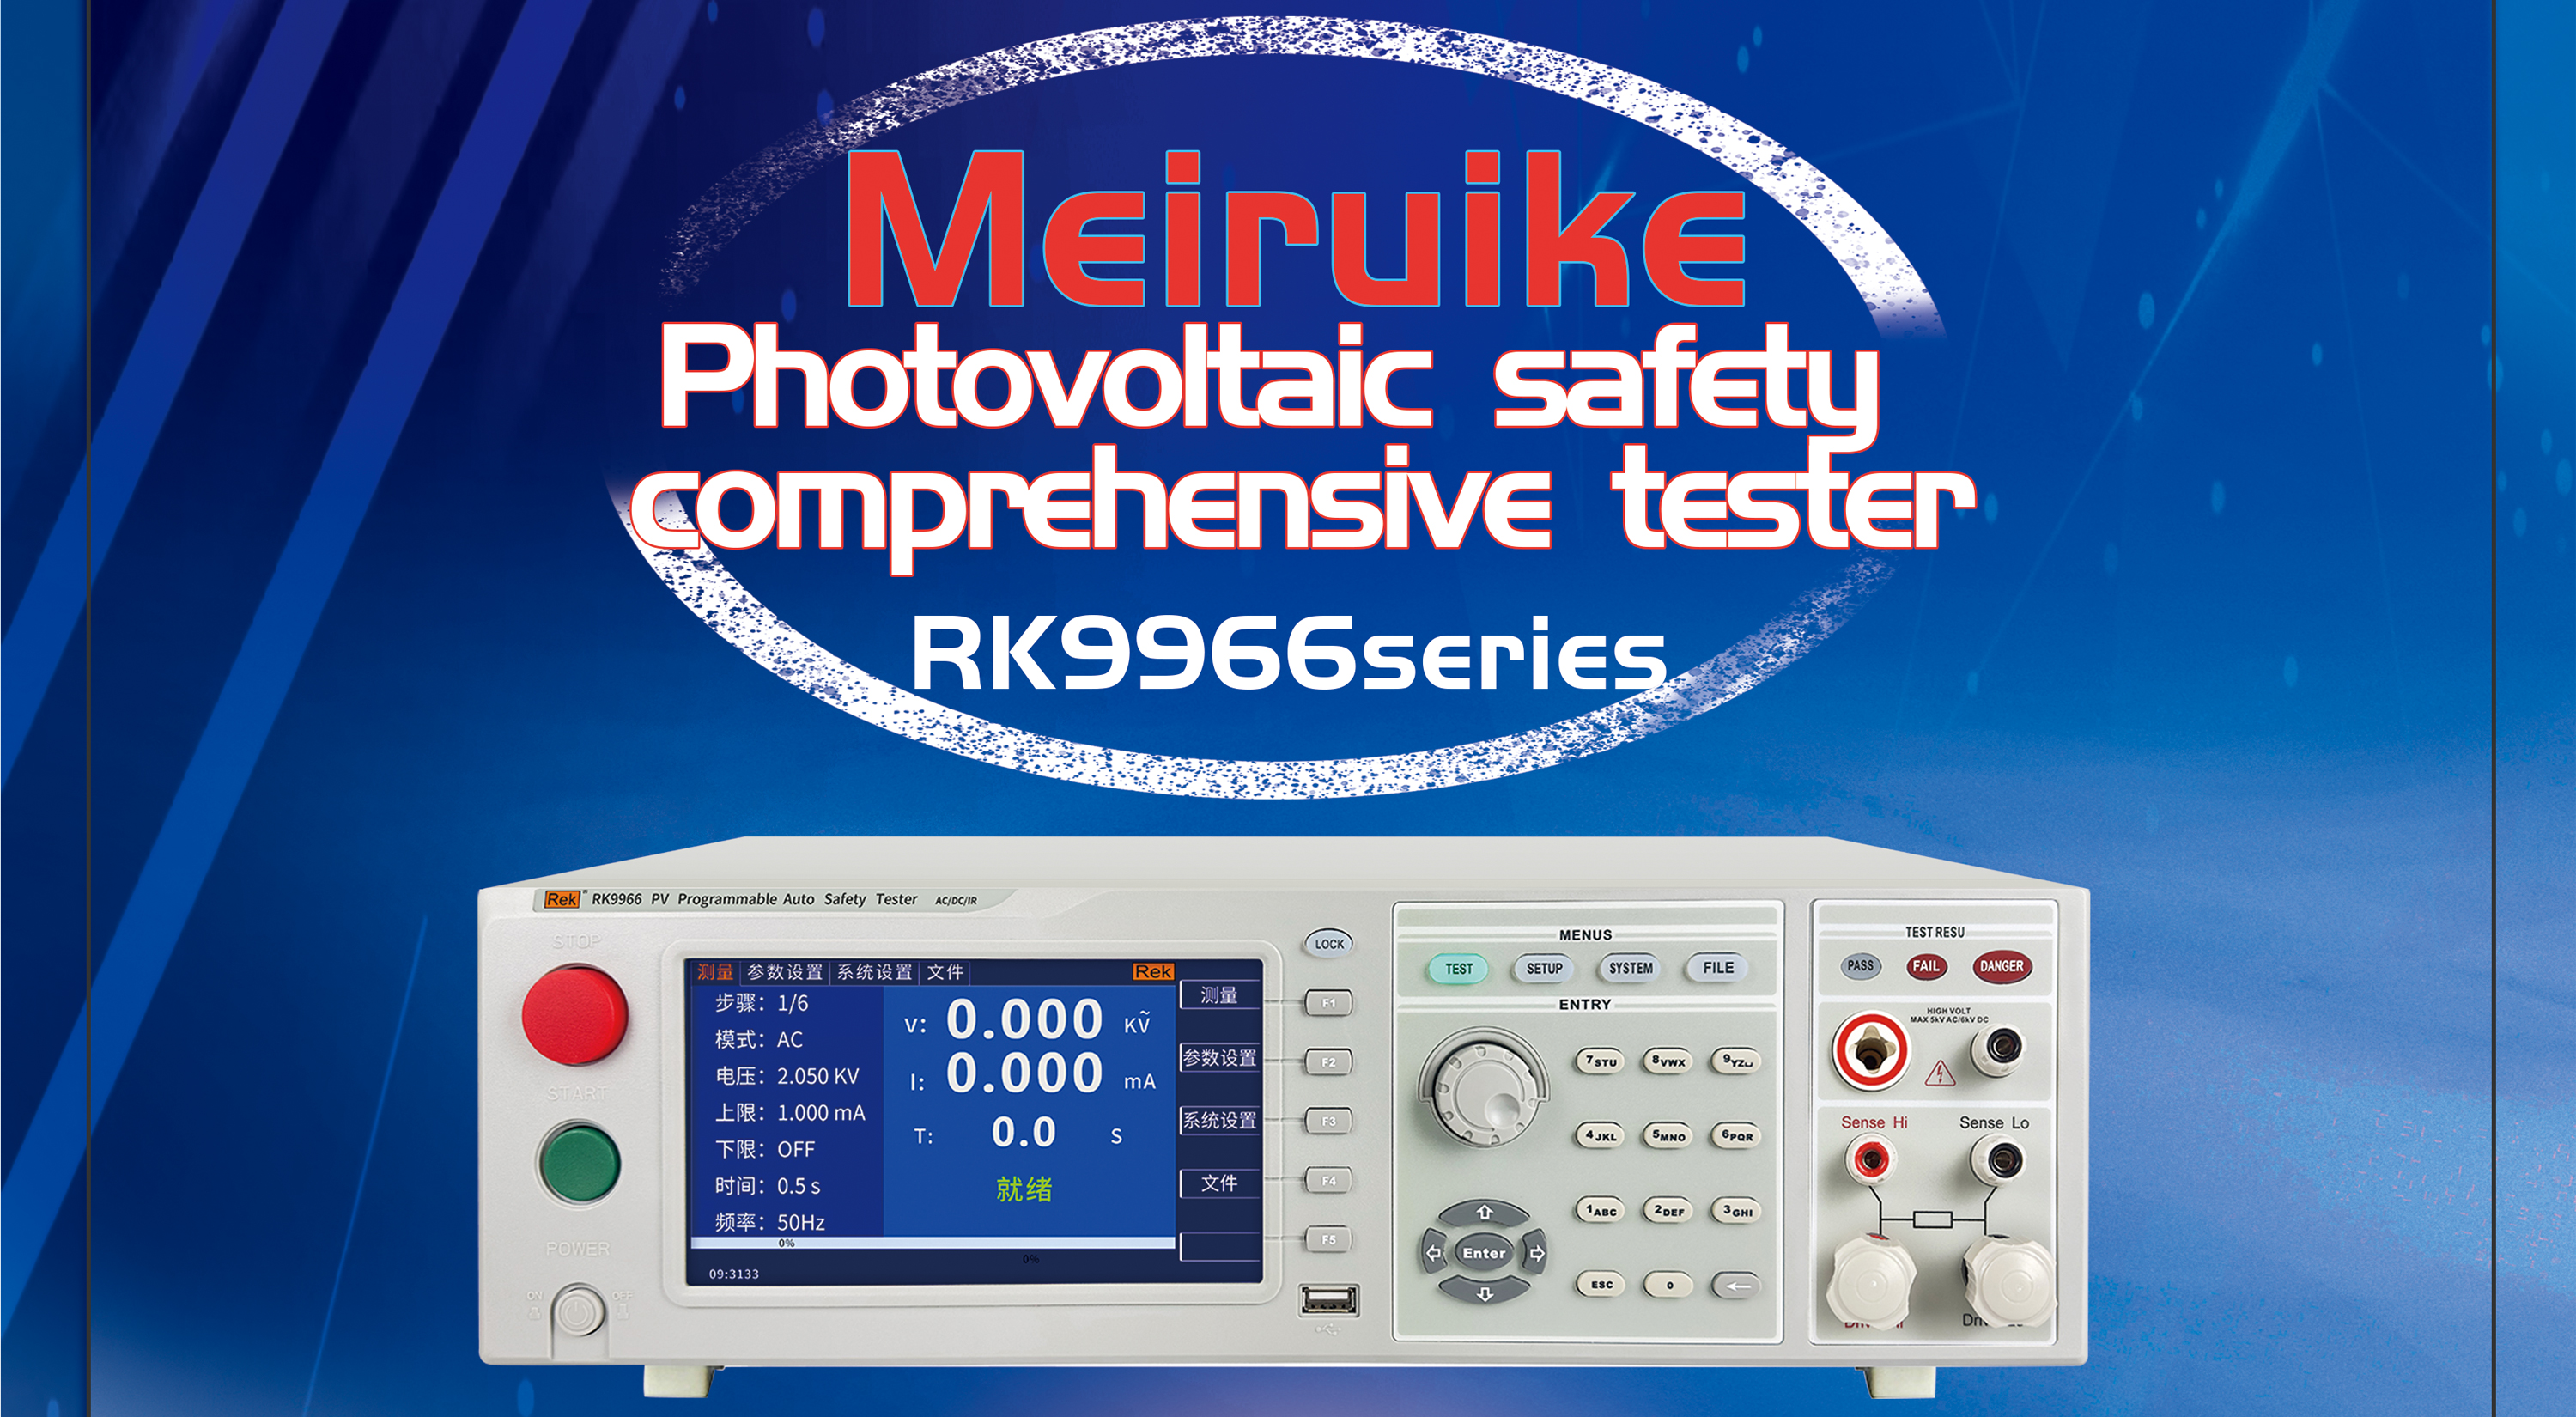 https://www.rektest.com/rk9966rk9966ark9966brk9966c-photovoltaic-safety-comprehensive-tester-product/